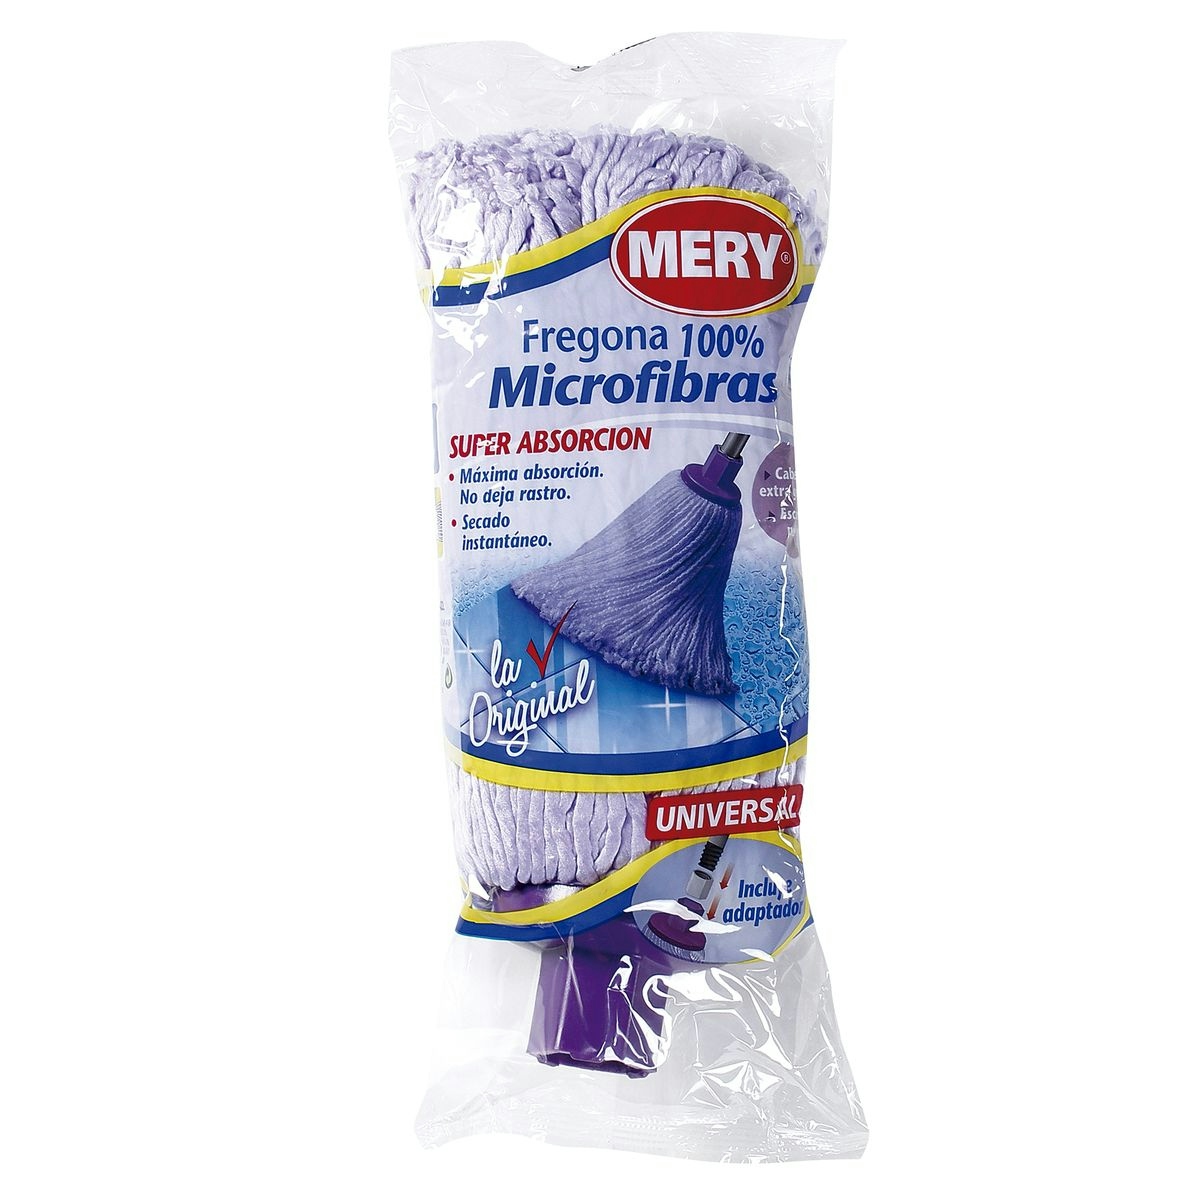 Fregona microfibras MERY 100% paquete 1 ud